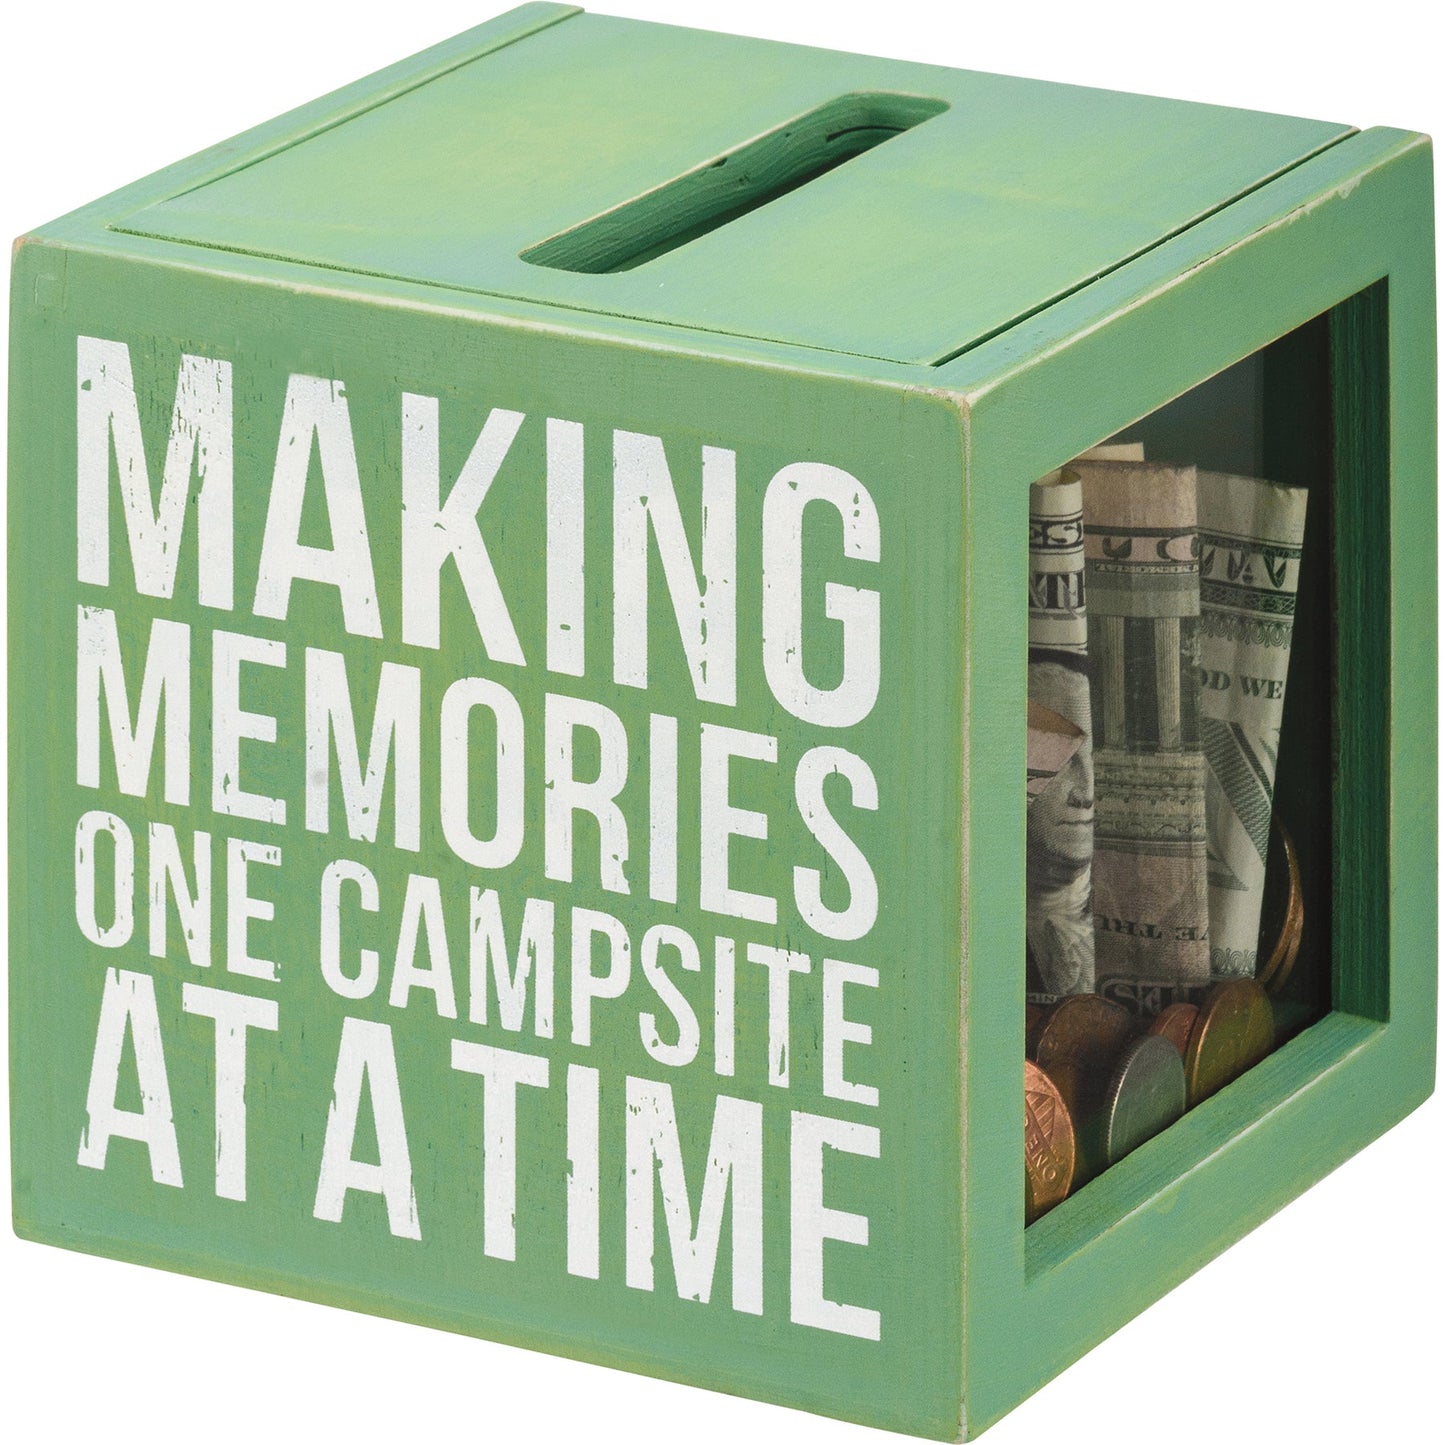 Saving up for a Camper Bank + Socks Gift Set - Marmalade Mercantile